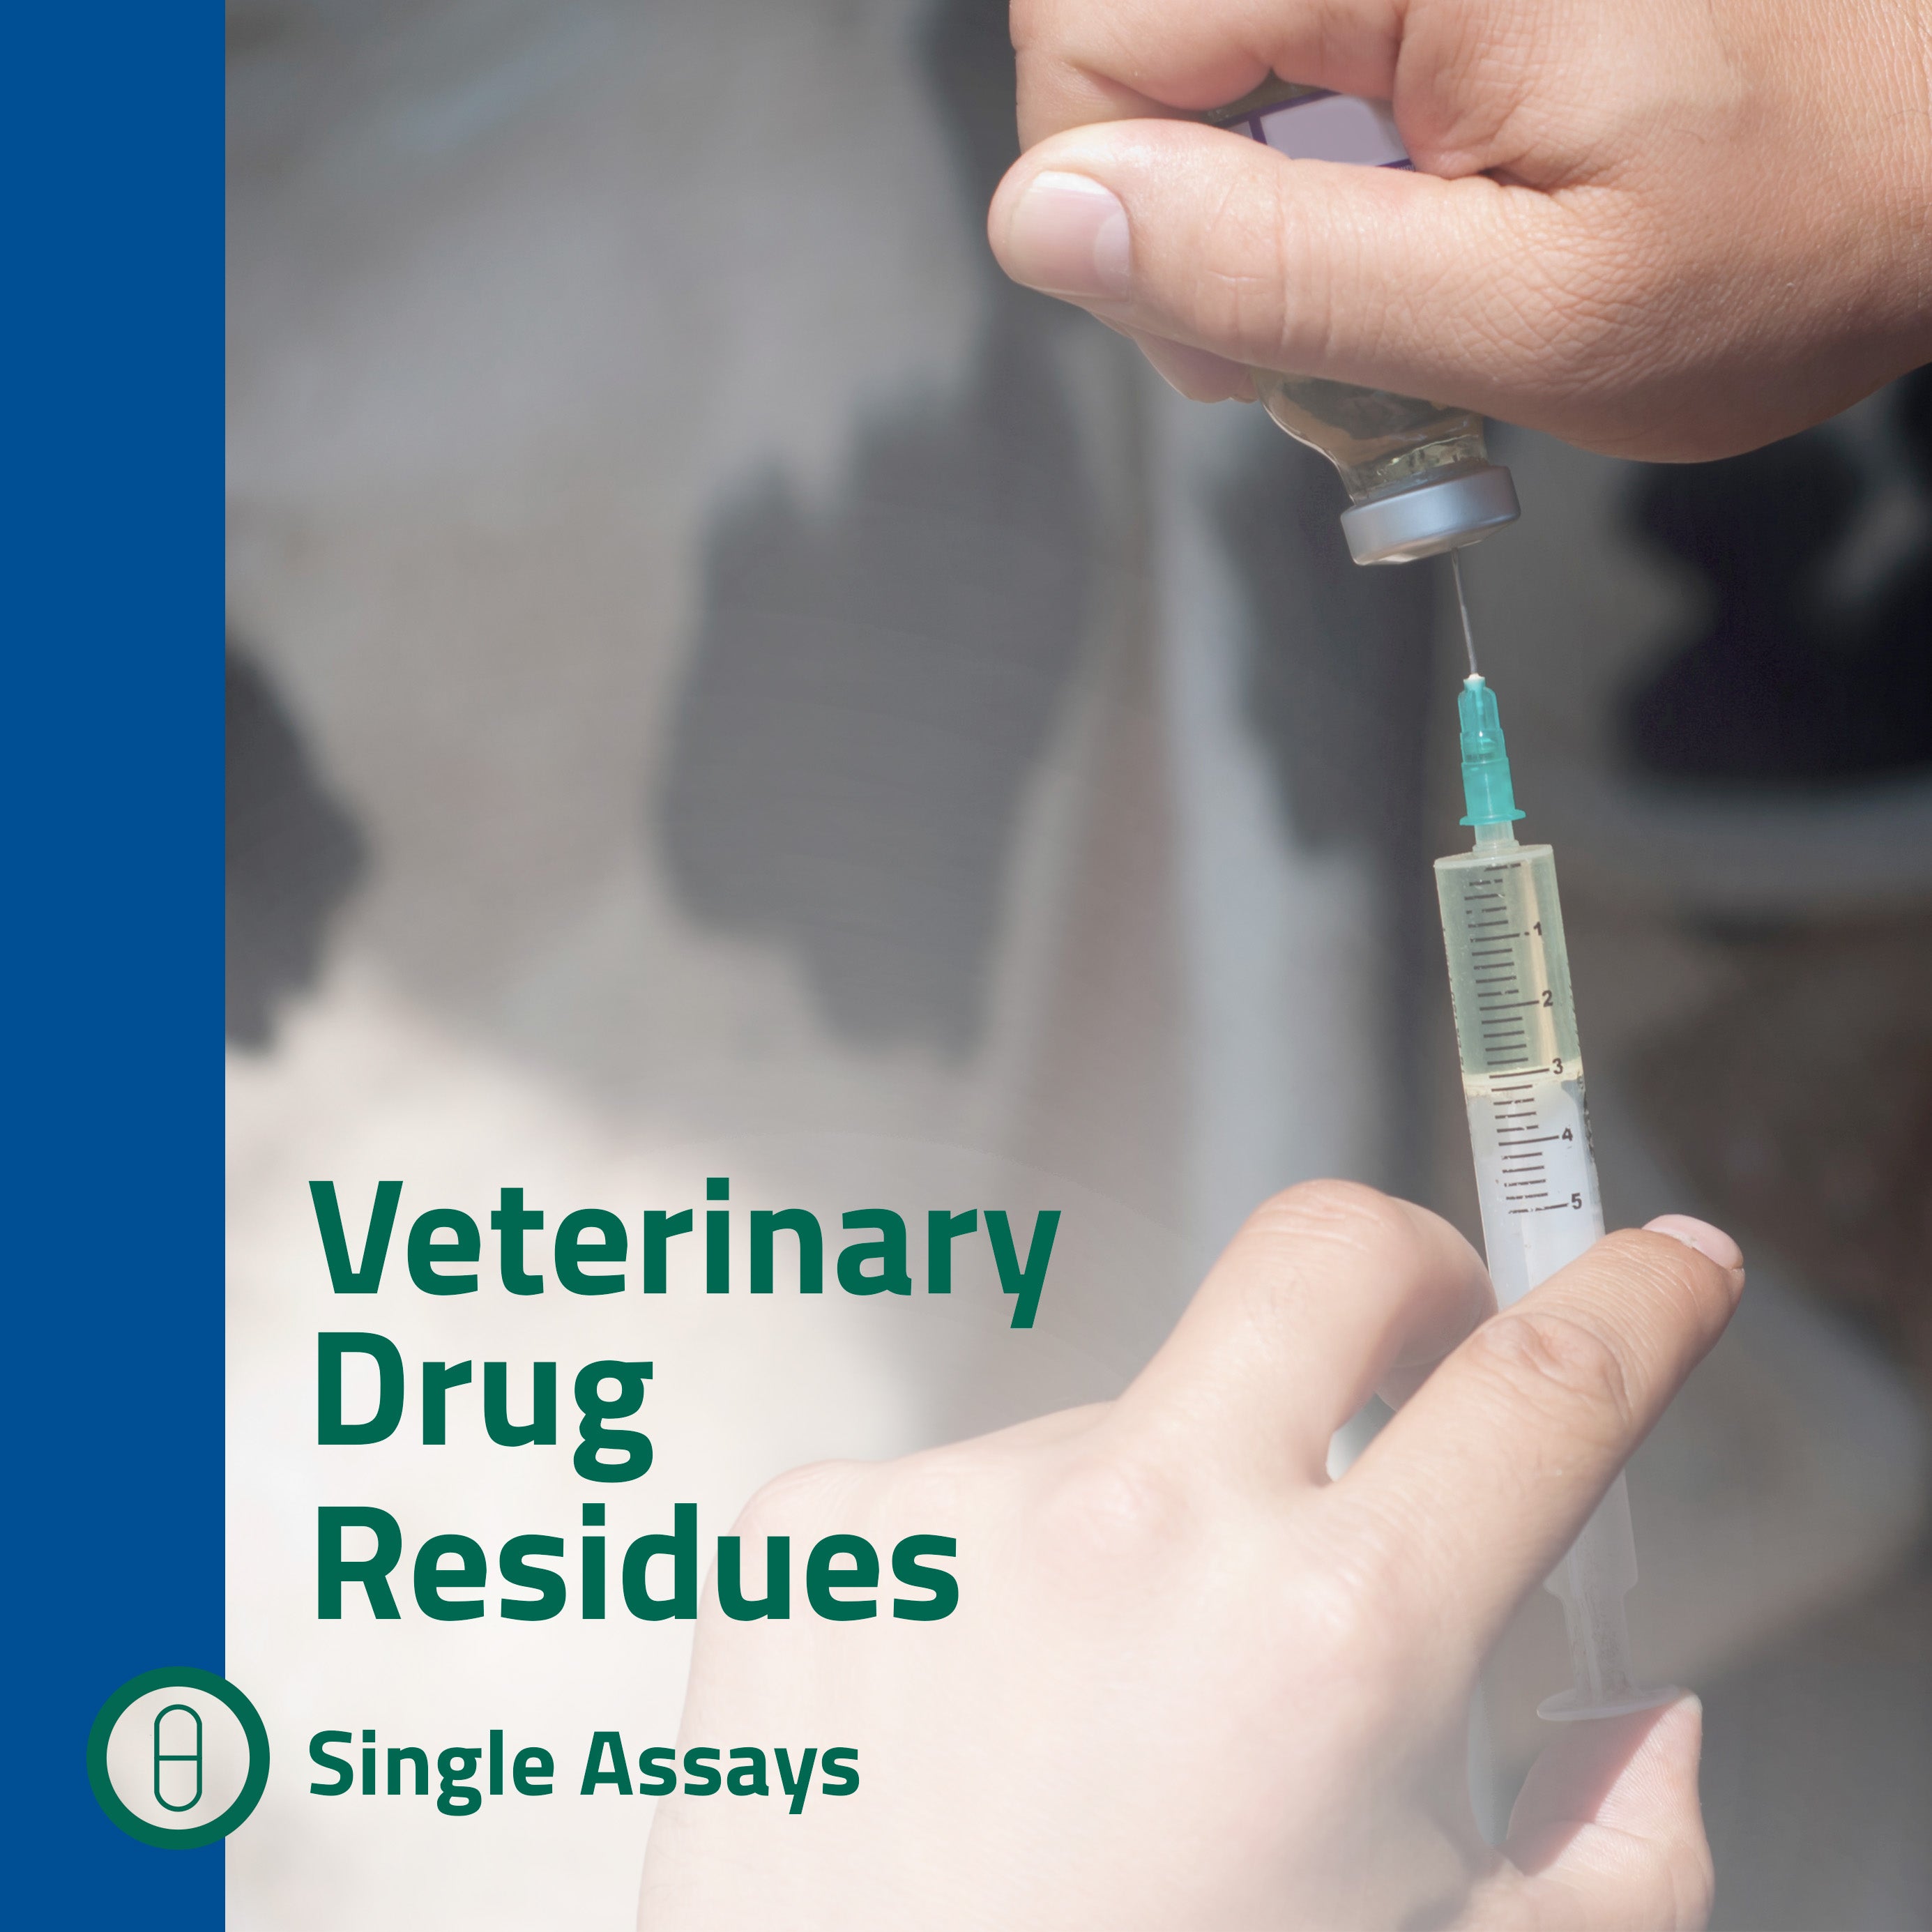 Complete Veterinary Drug Residue Assay